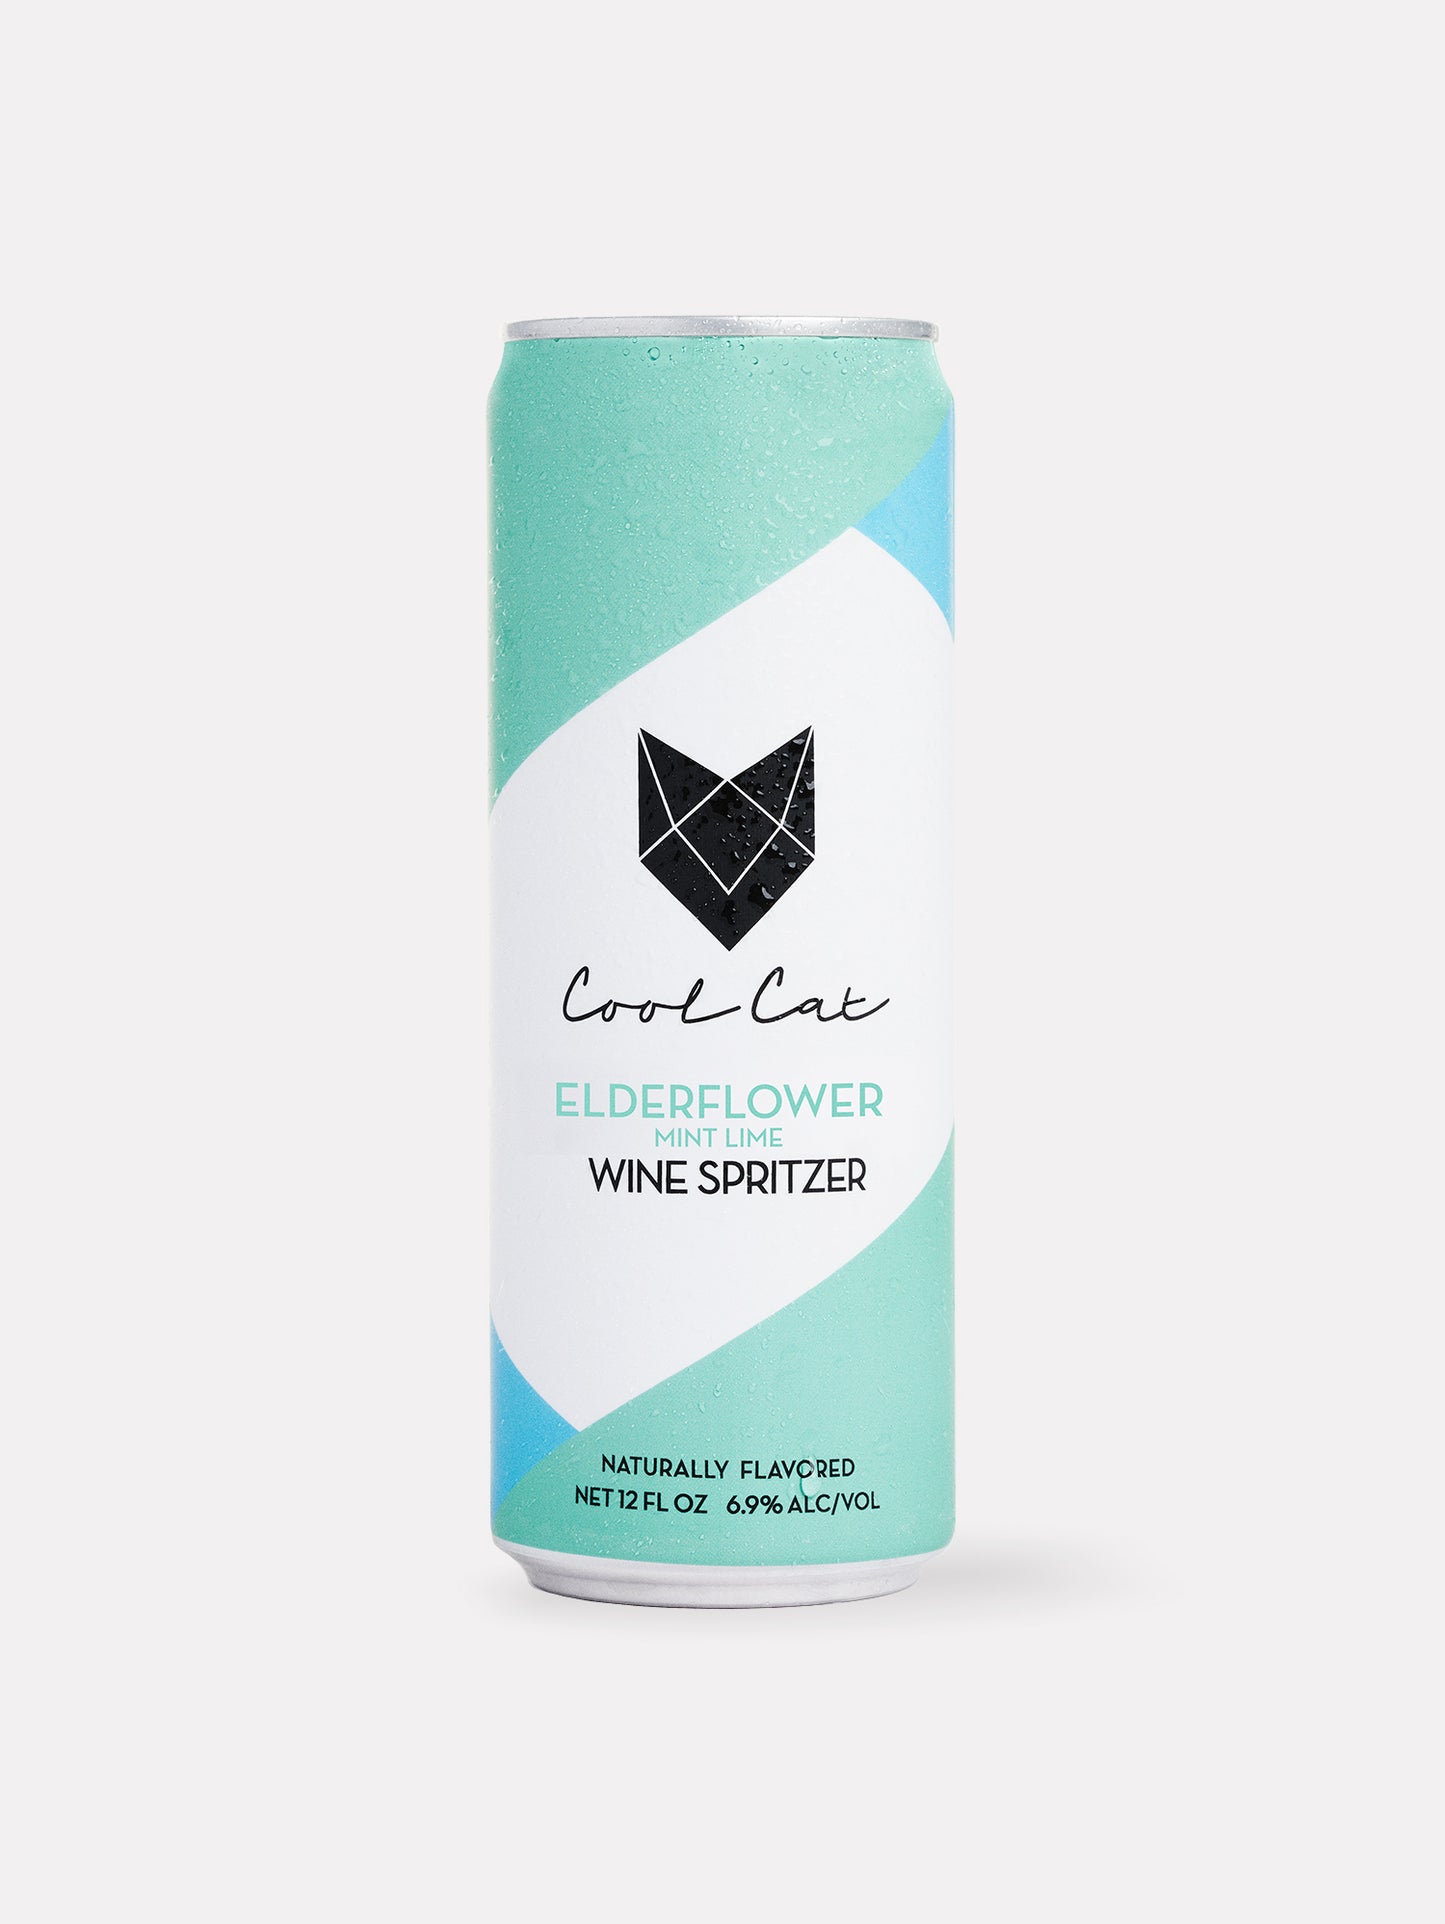 A can of Cool Cat Elderflower Mint Lime Wine Spritzer.